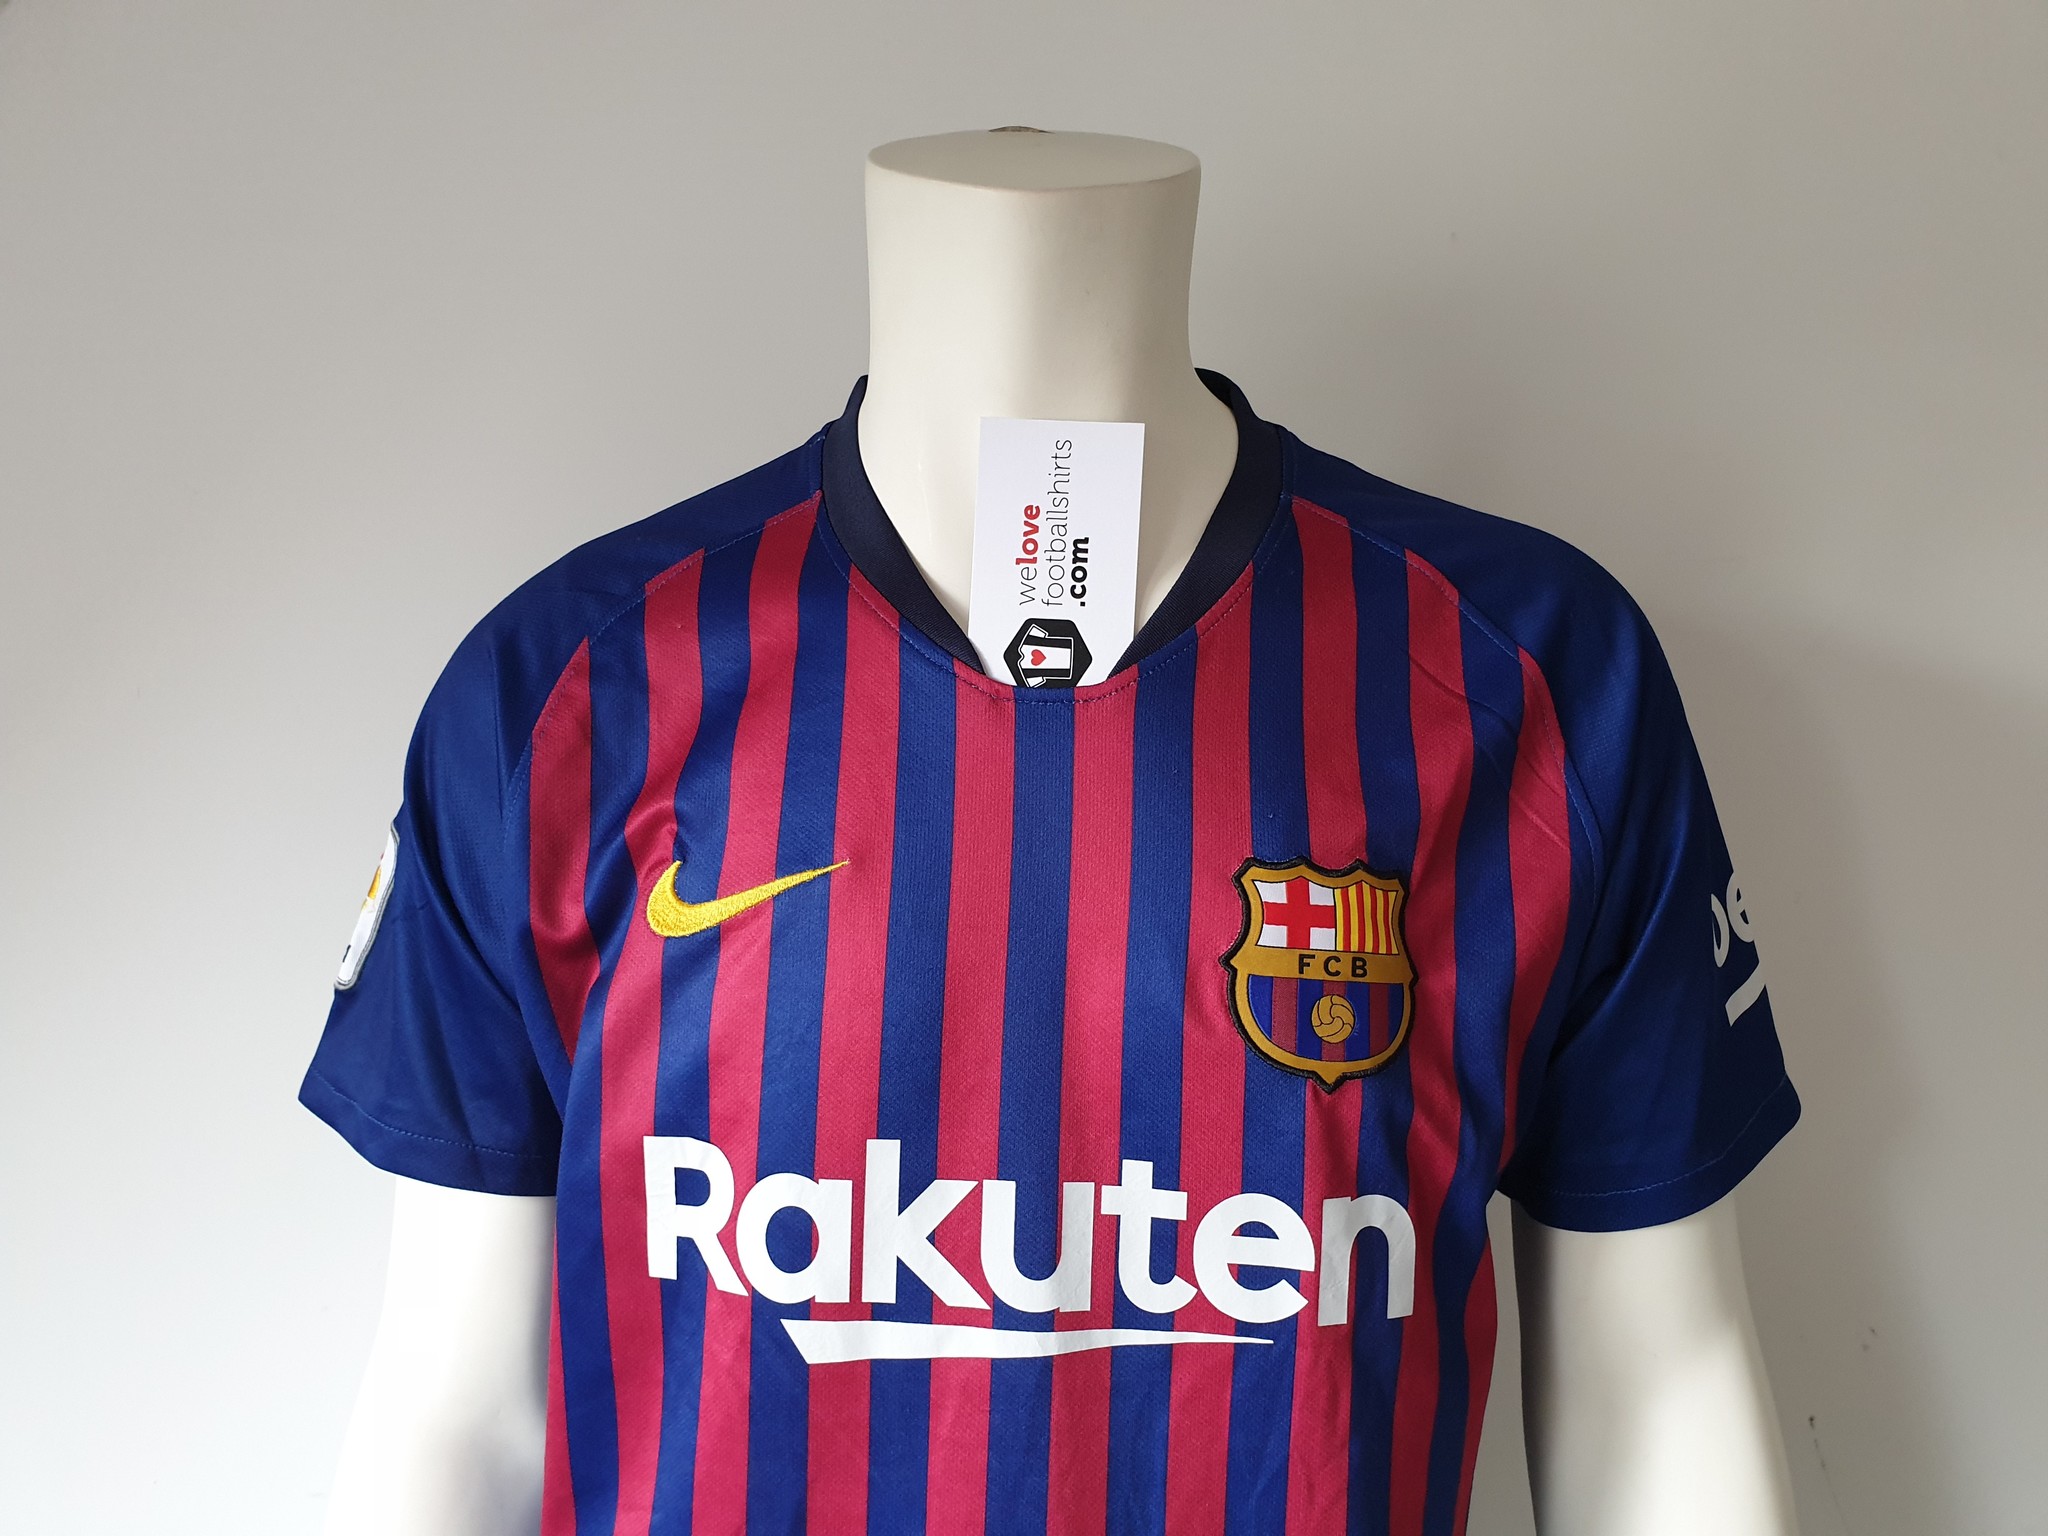 Nike Original Nike Football Shirt Fc Barcelona 2017/18 - Barcelona Jersey 2018 19 , HD Wallpaper & Backgrounds